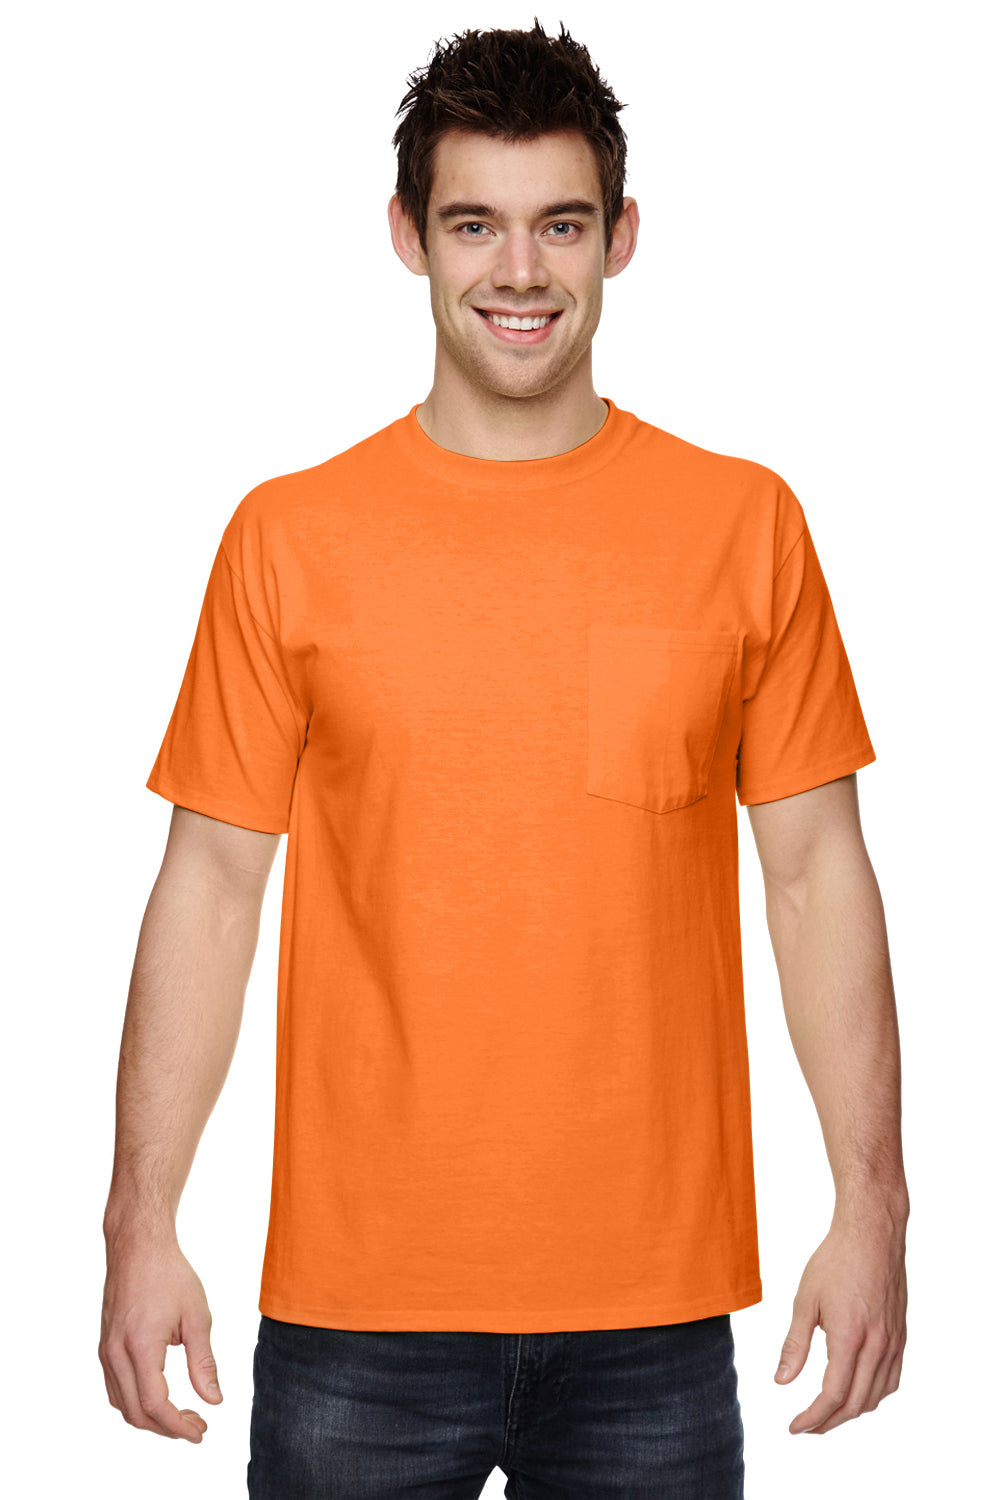 Fruit Of The Loom 3931P Mens HD Jersey Short Sleeve Crewneck T-Shirt w/ Pocket Safety Orange Front